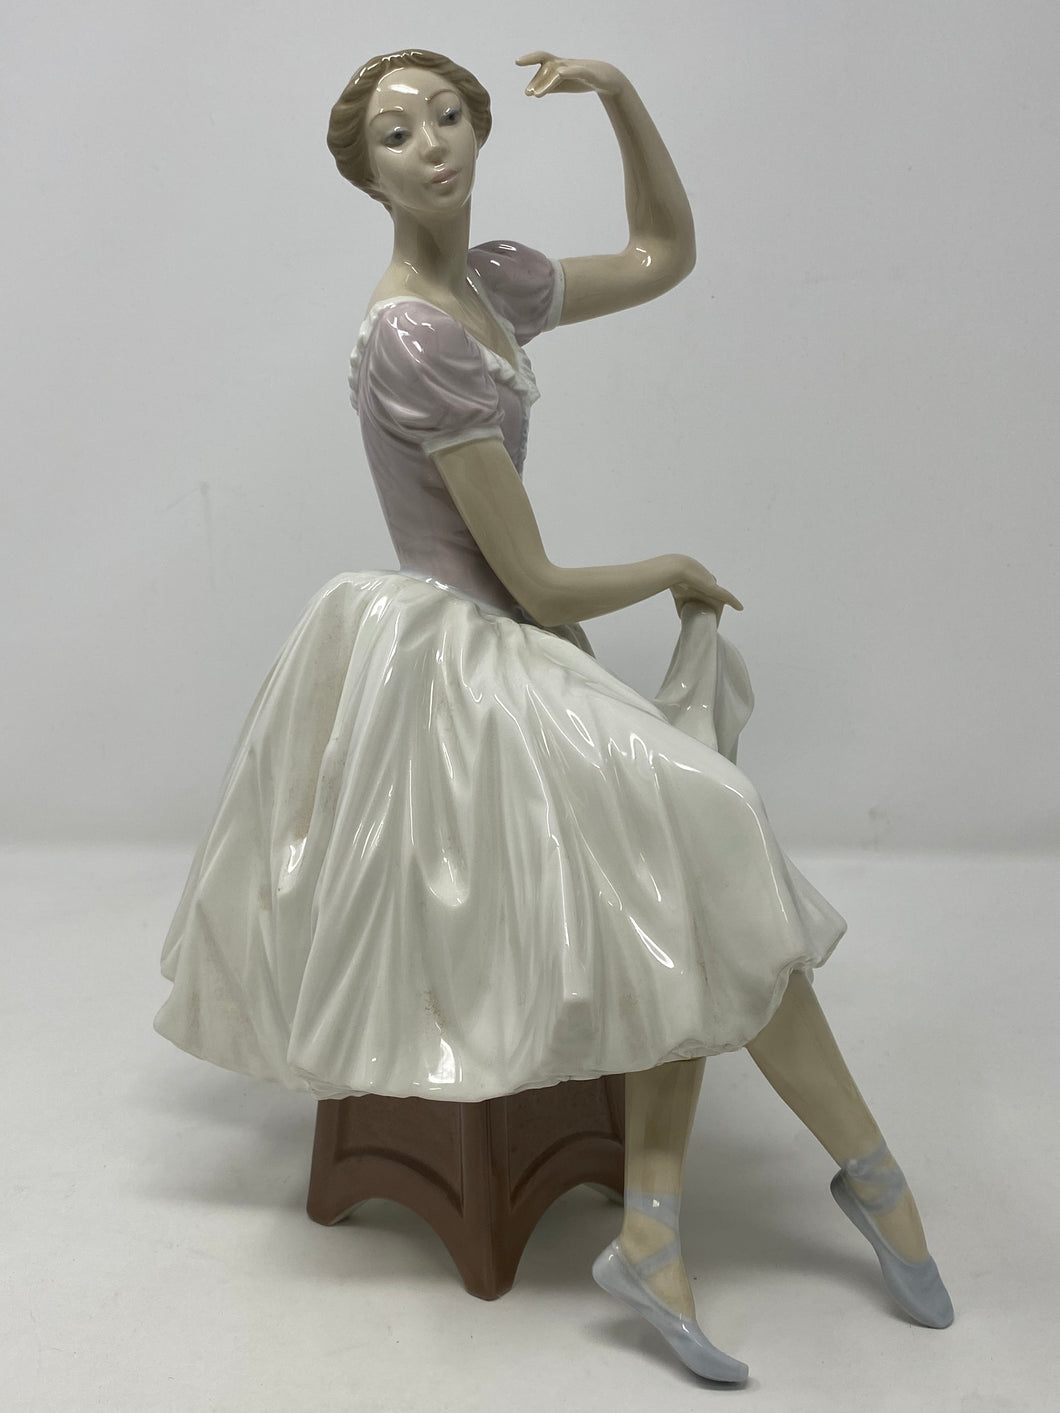 Lladro Weary Ballerina Girl Sitting on Stool - Retired